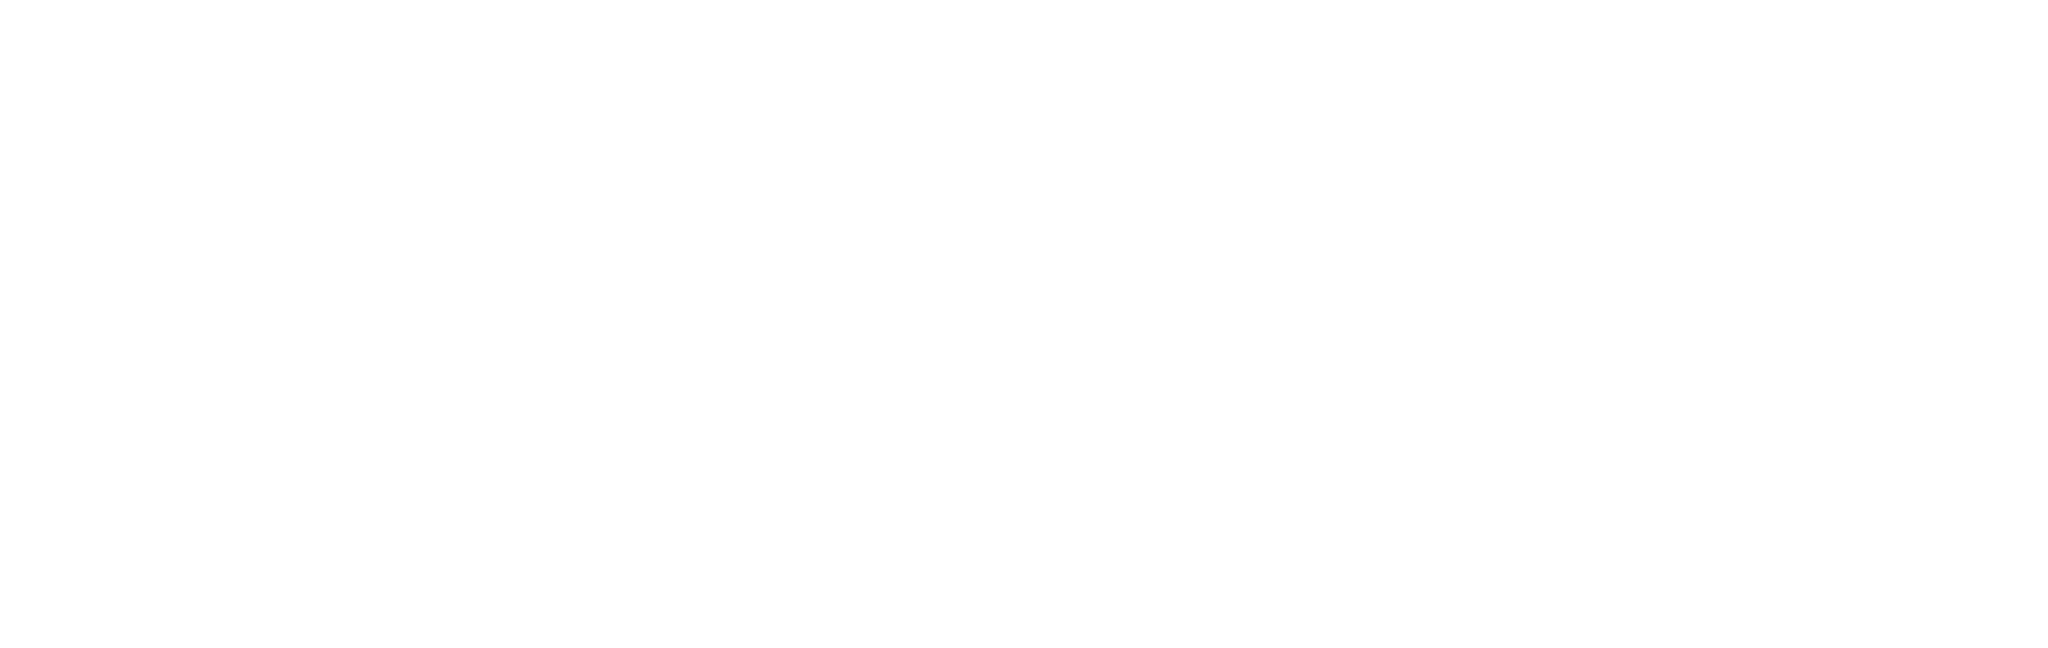 Mindfulness & Grief Institute